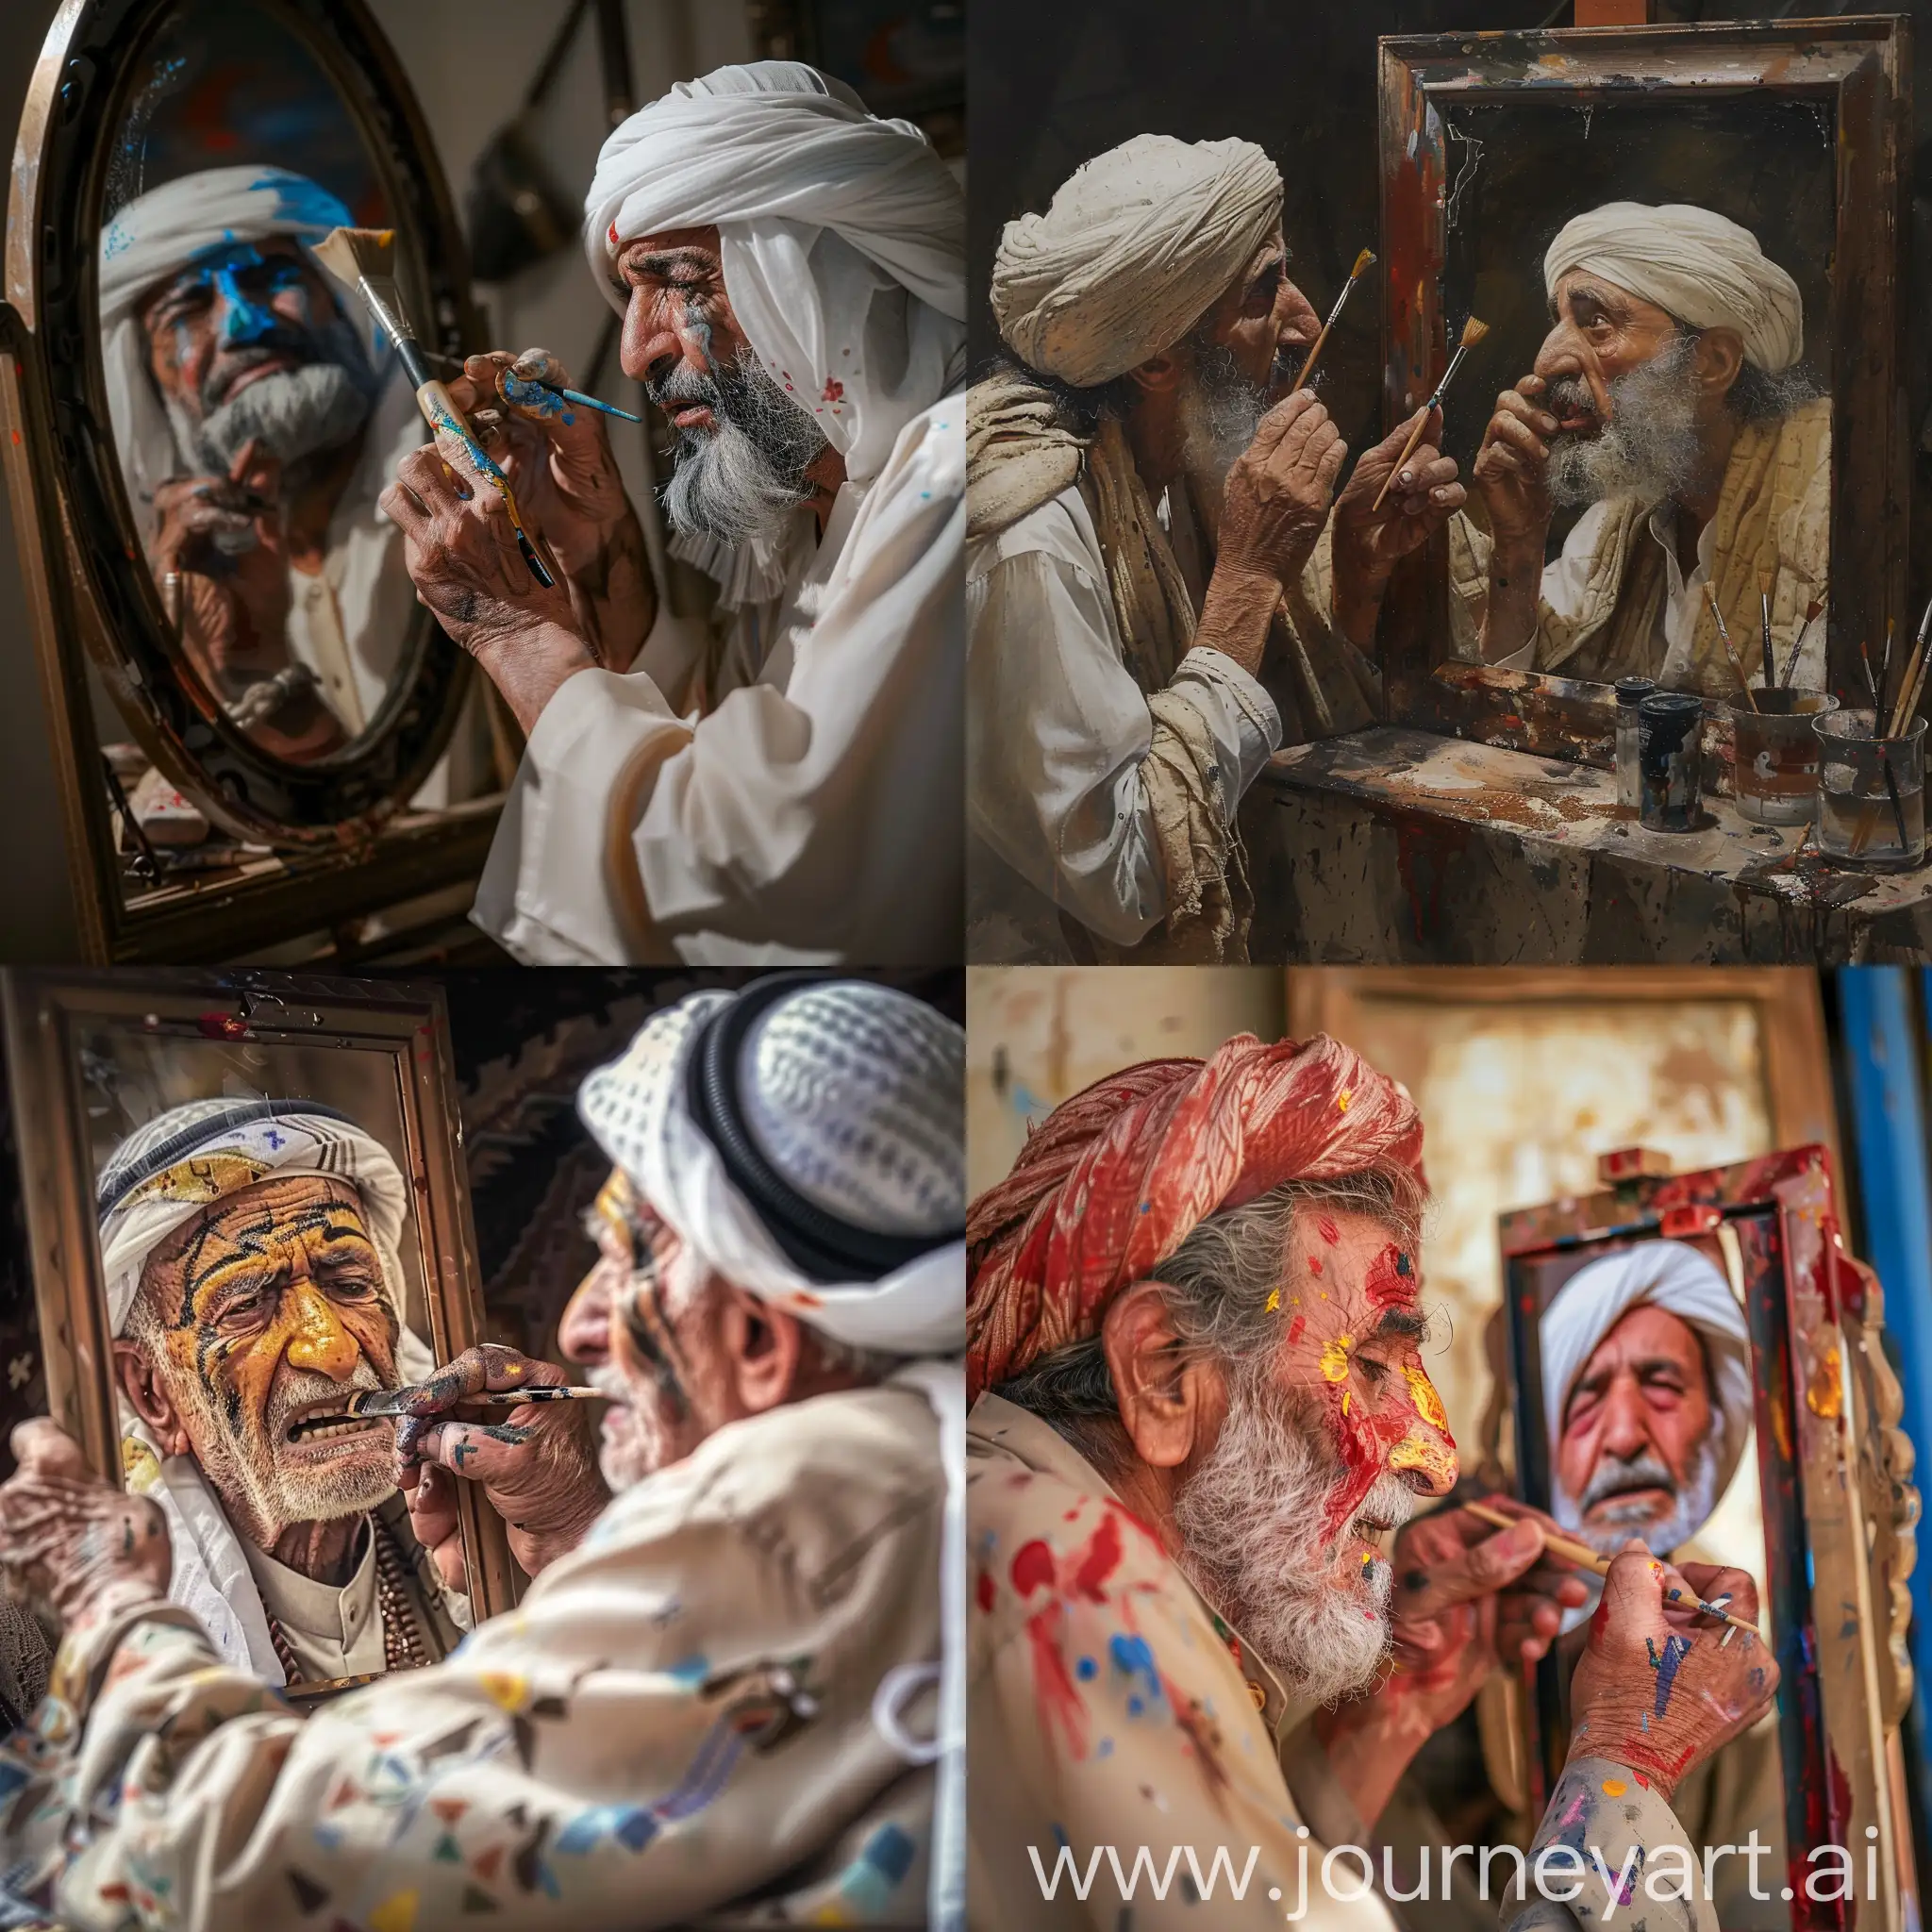 Elderly-Sheikh-Transforms-into-Youthful-Self-in-Artful-Mirror-Reflection